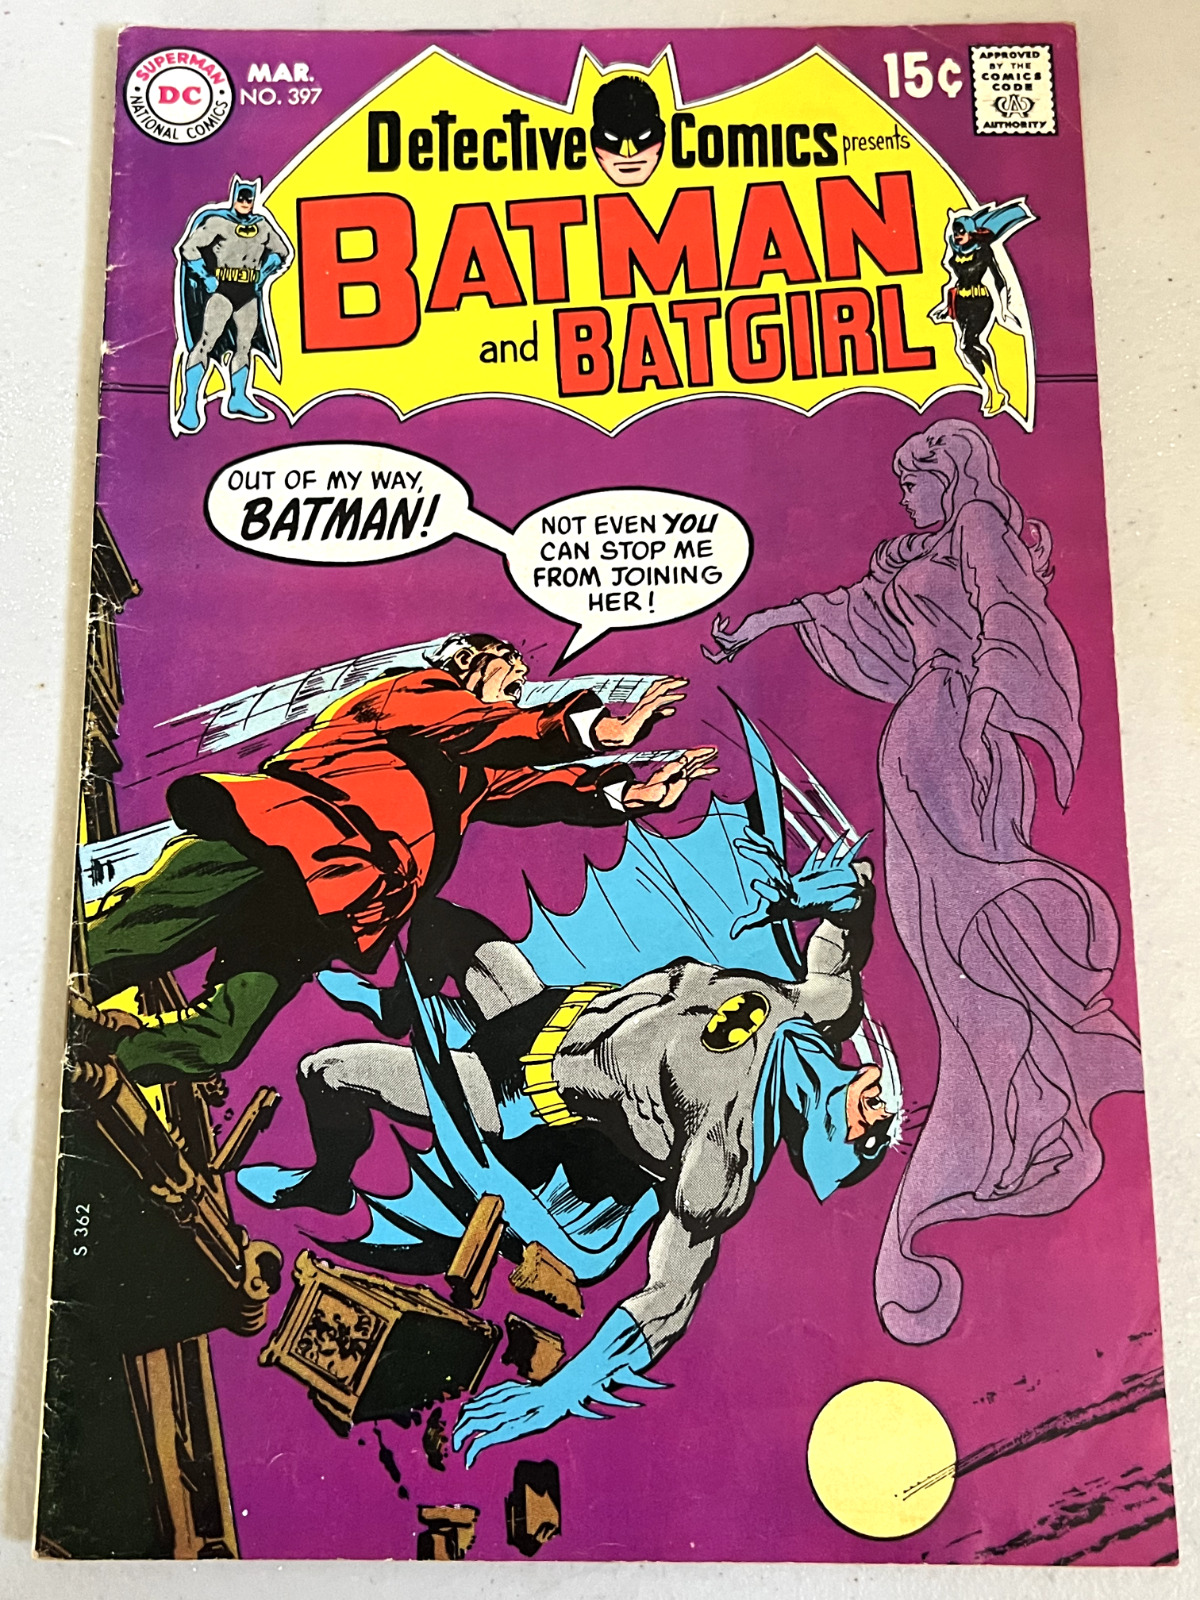 Detective Comics 397 Batman, Batgirl Neal Adams cover/story